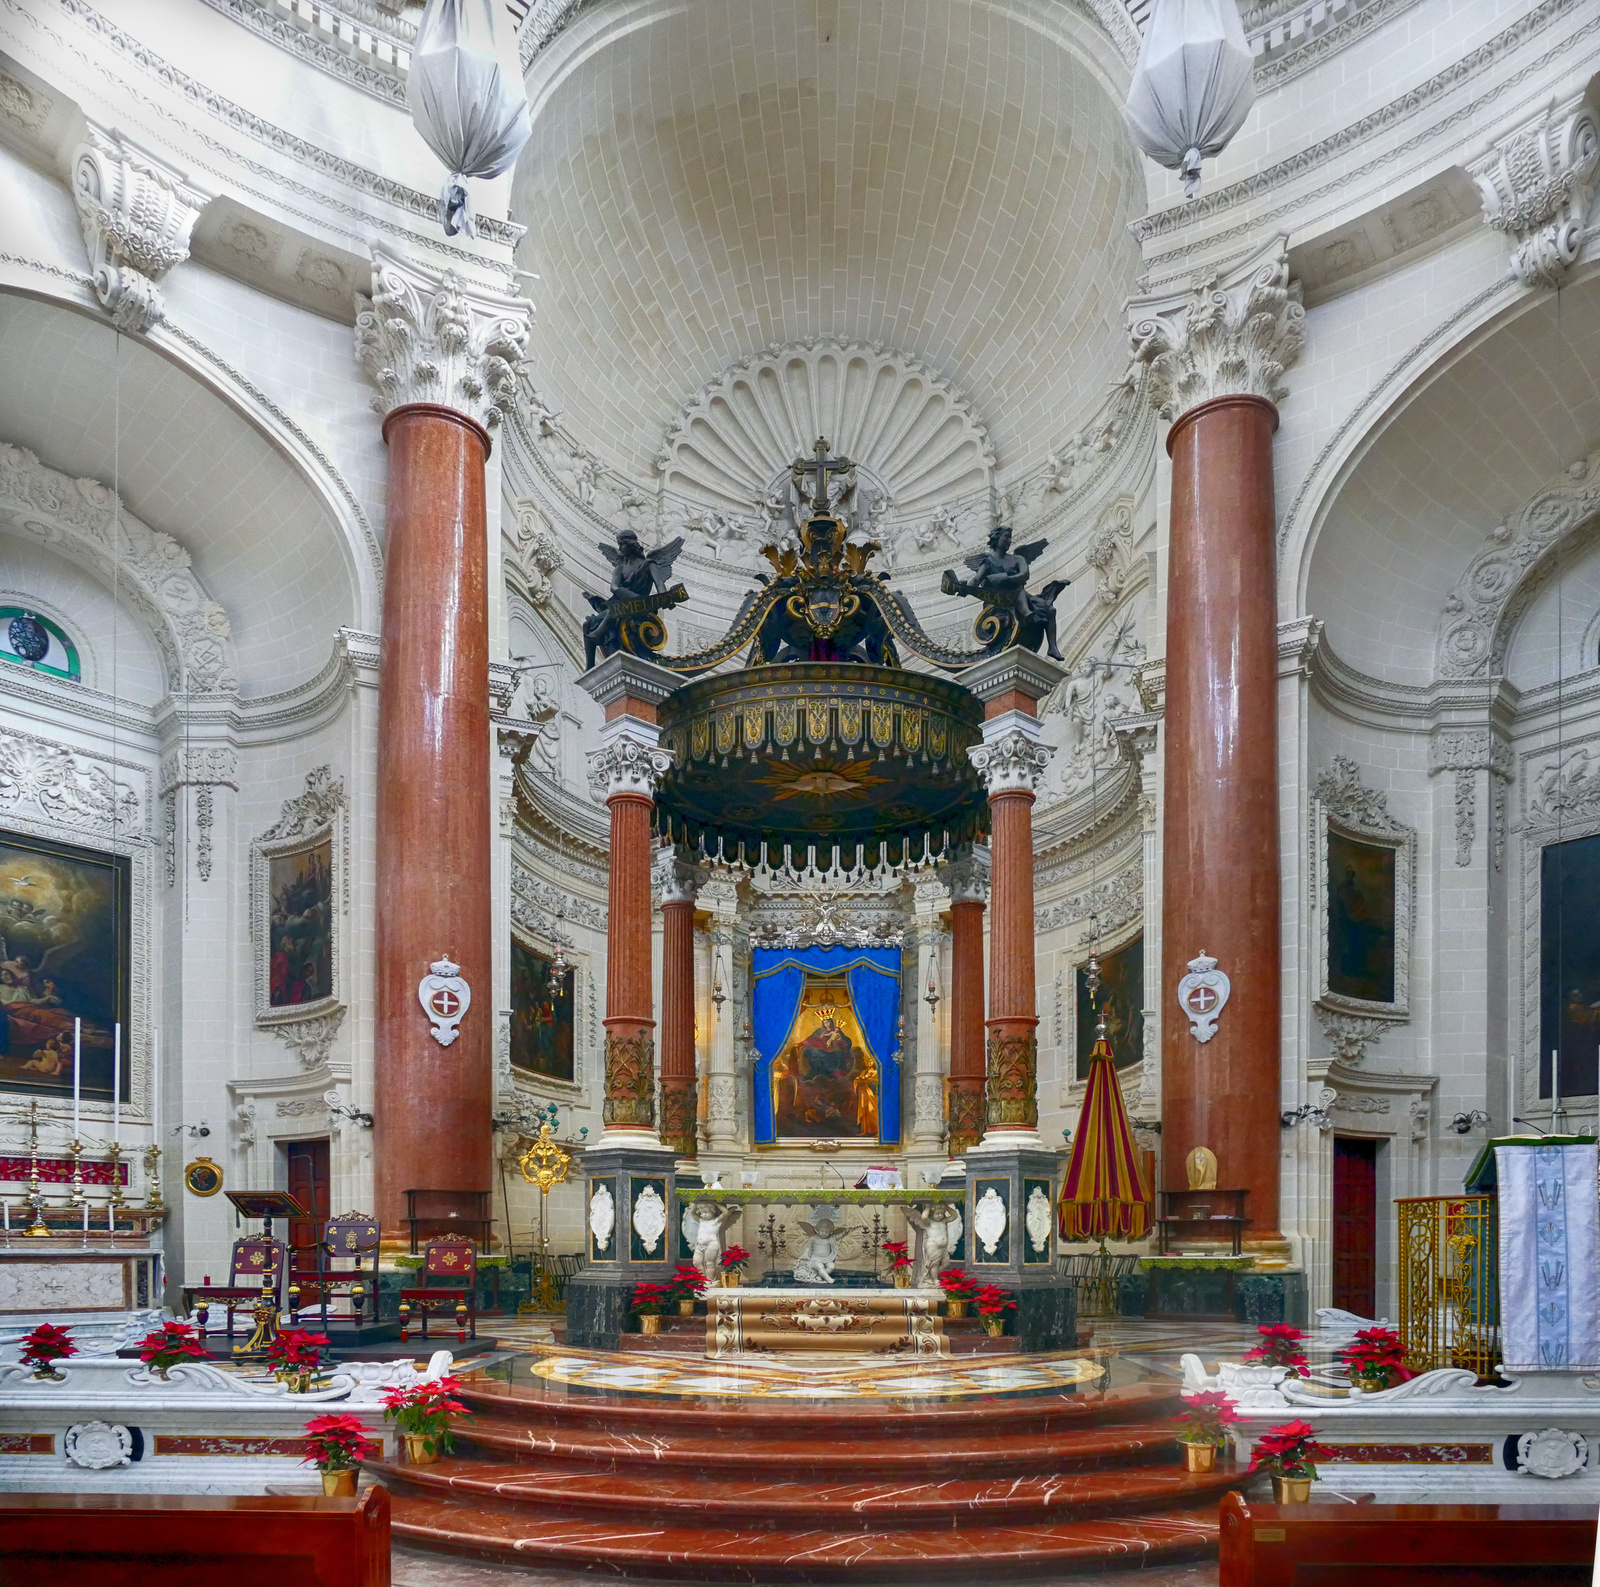 Costa - Valletta - Madonna tal-Karmnu - Basilica of Our Lady of